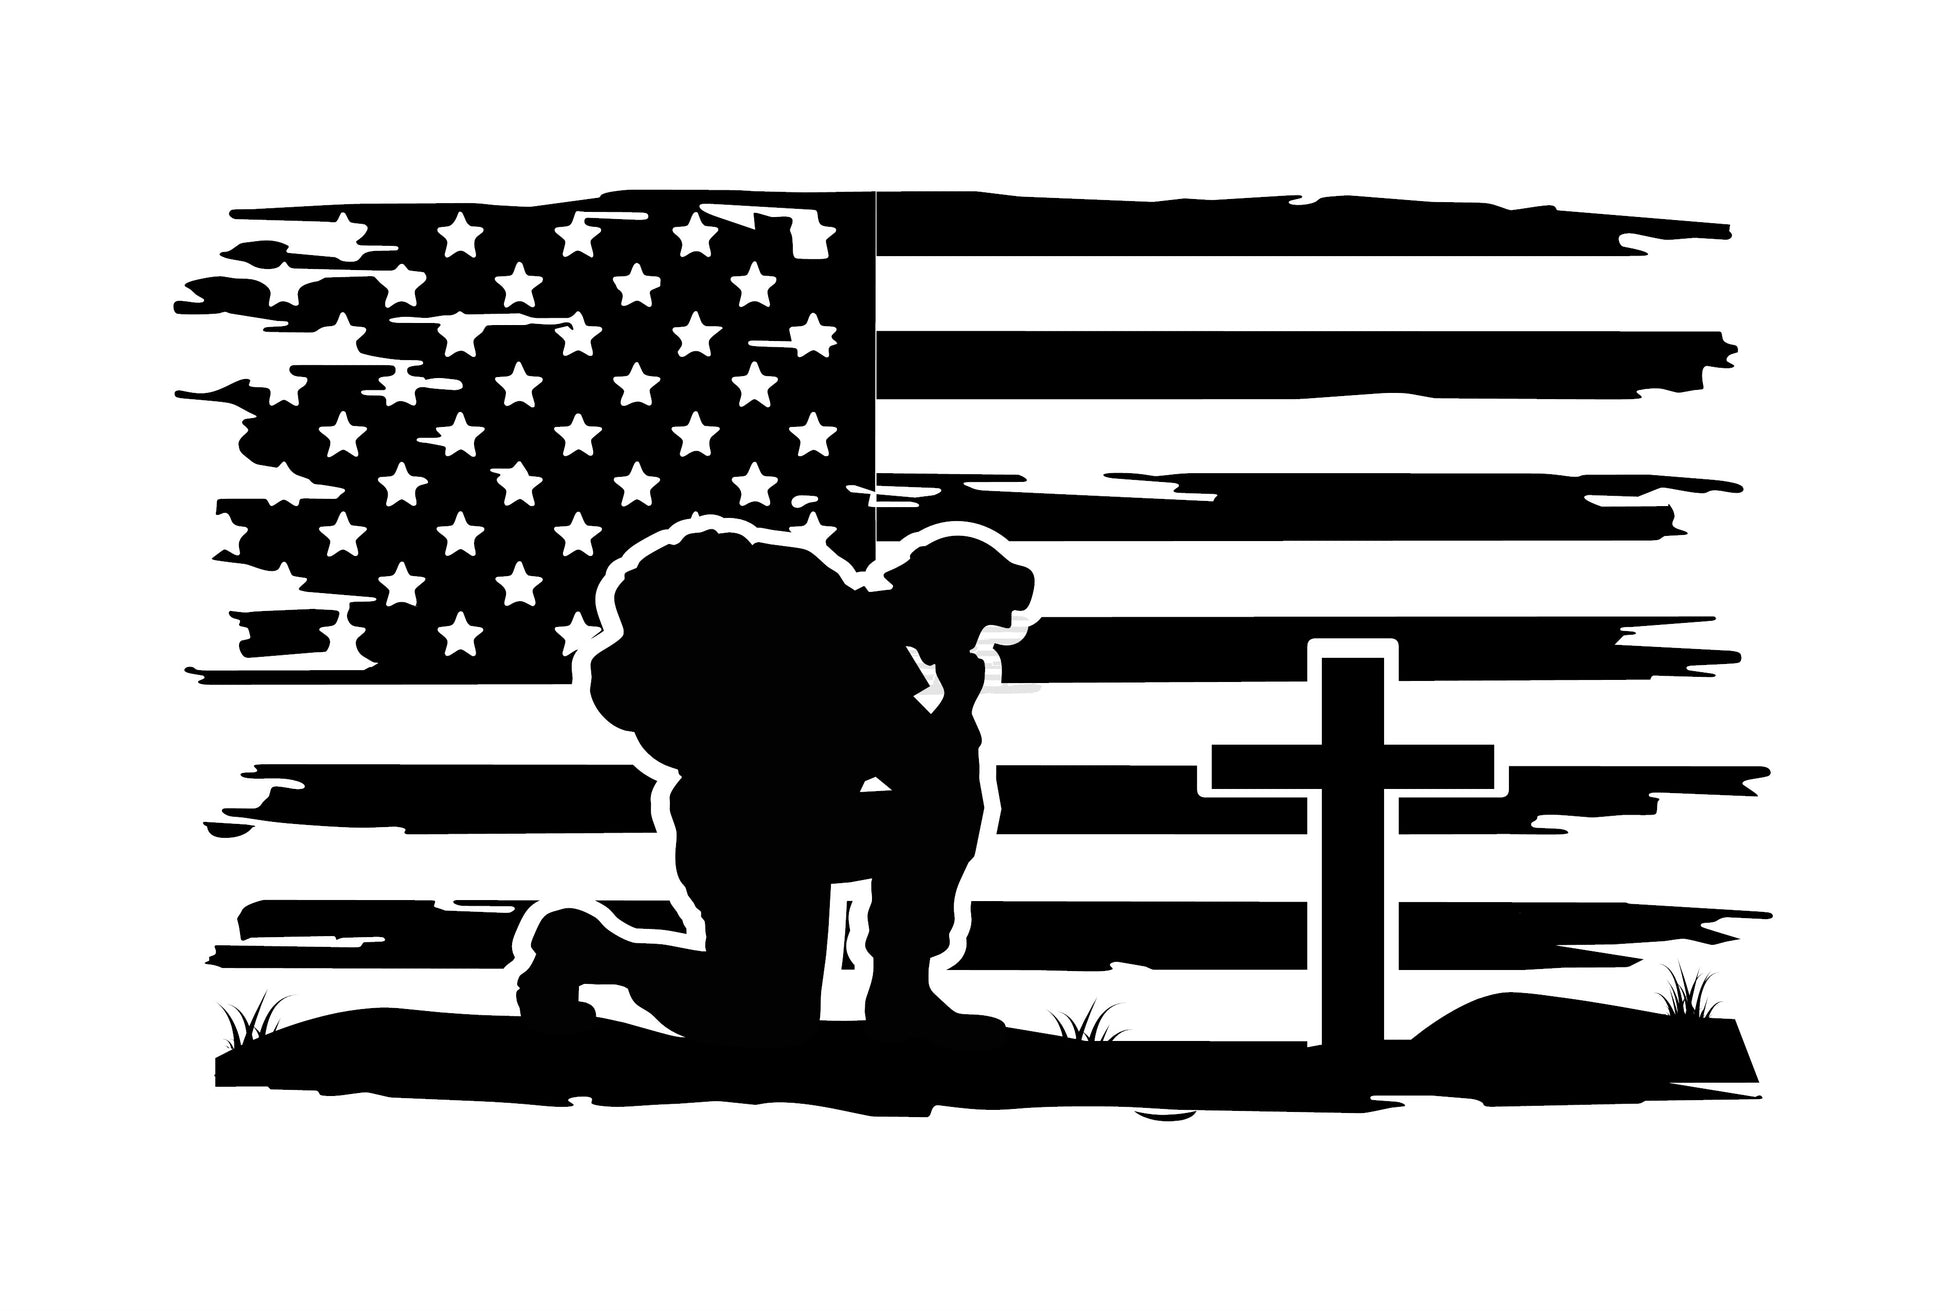 kneeling soldier silhouette pattern